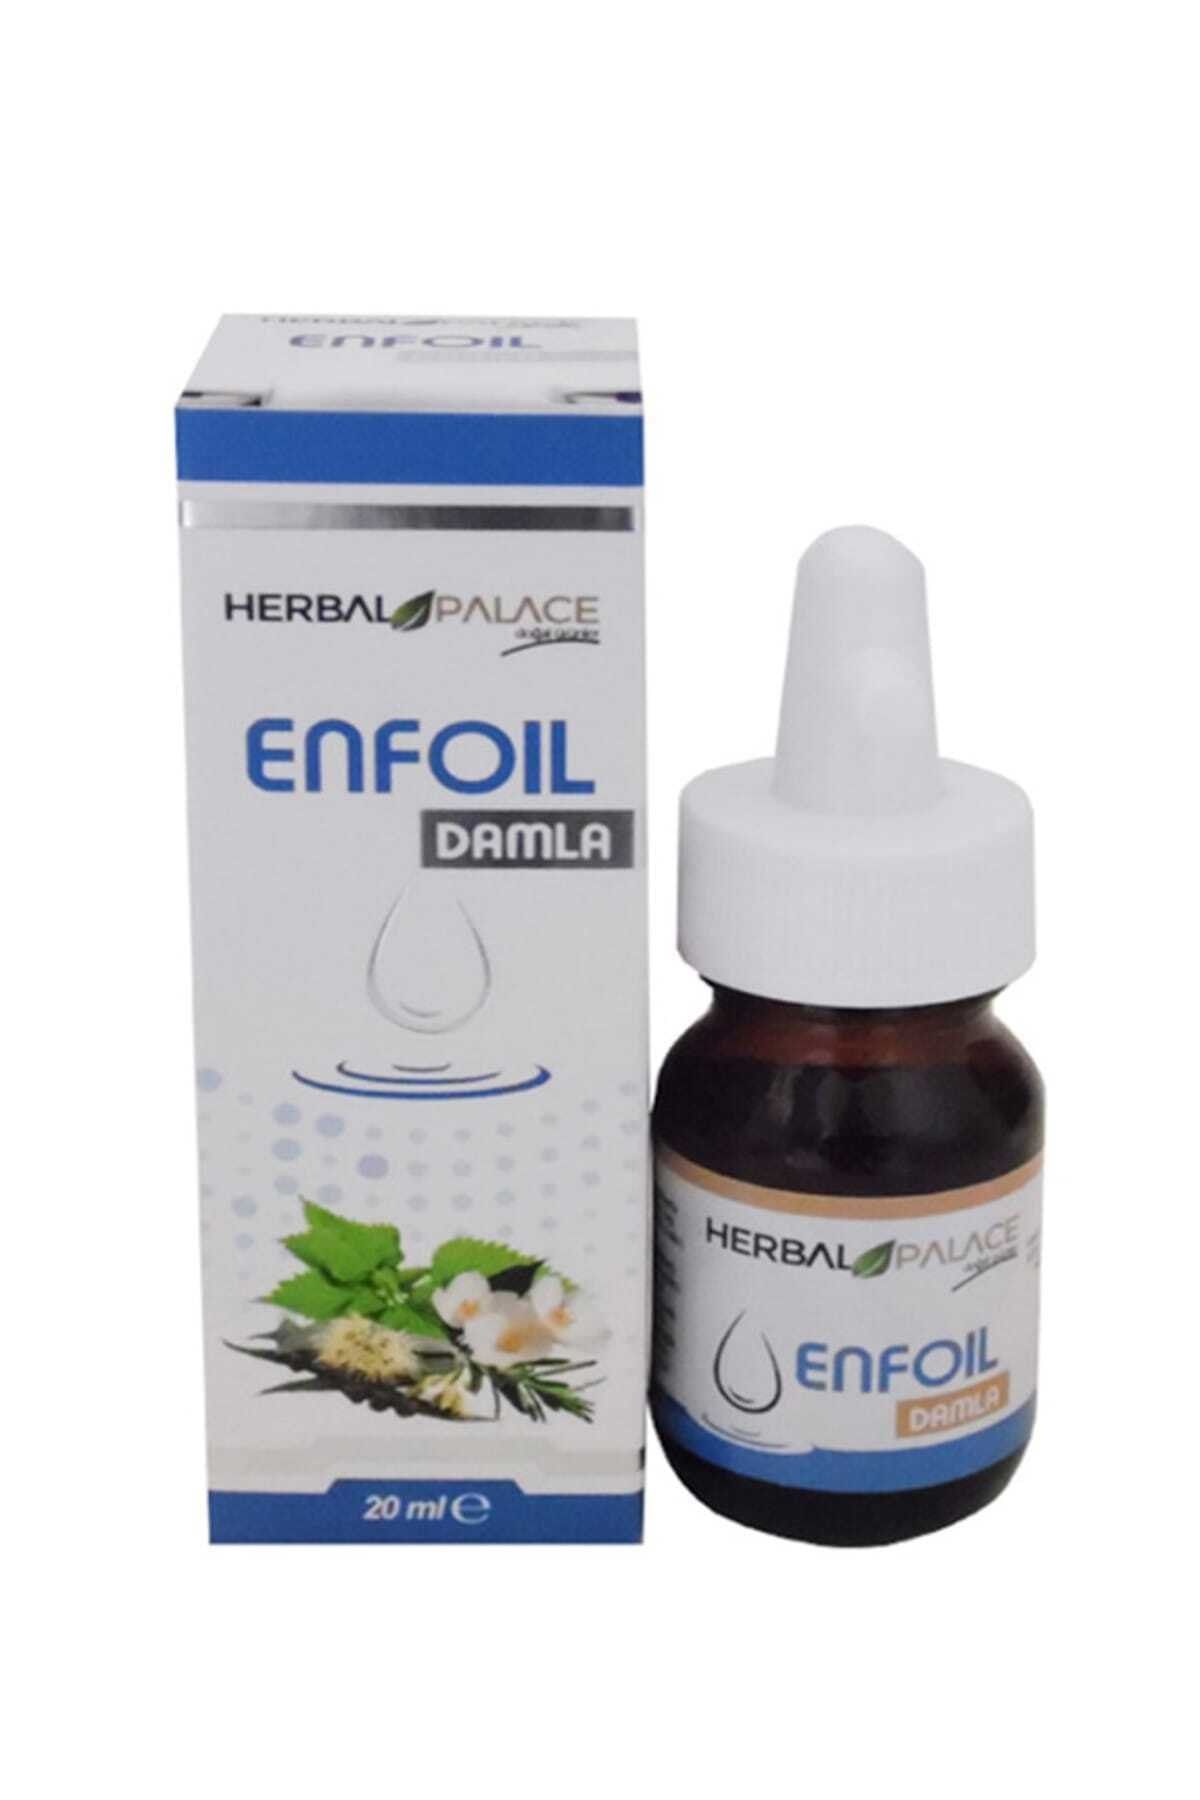 Herbal Palace Enfoil Damla 20 ml